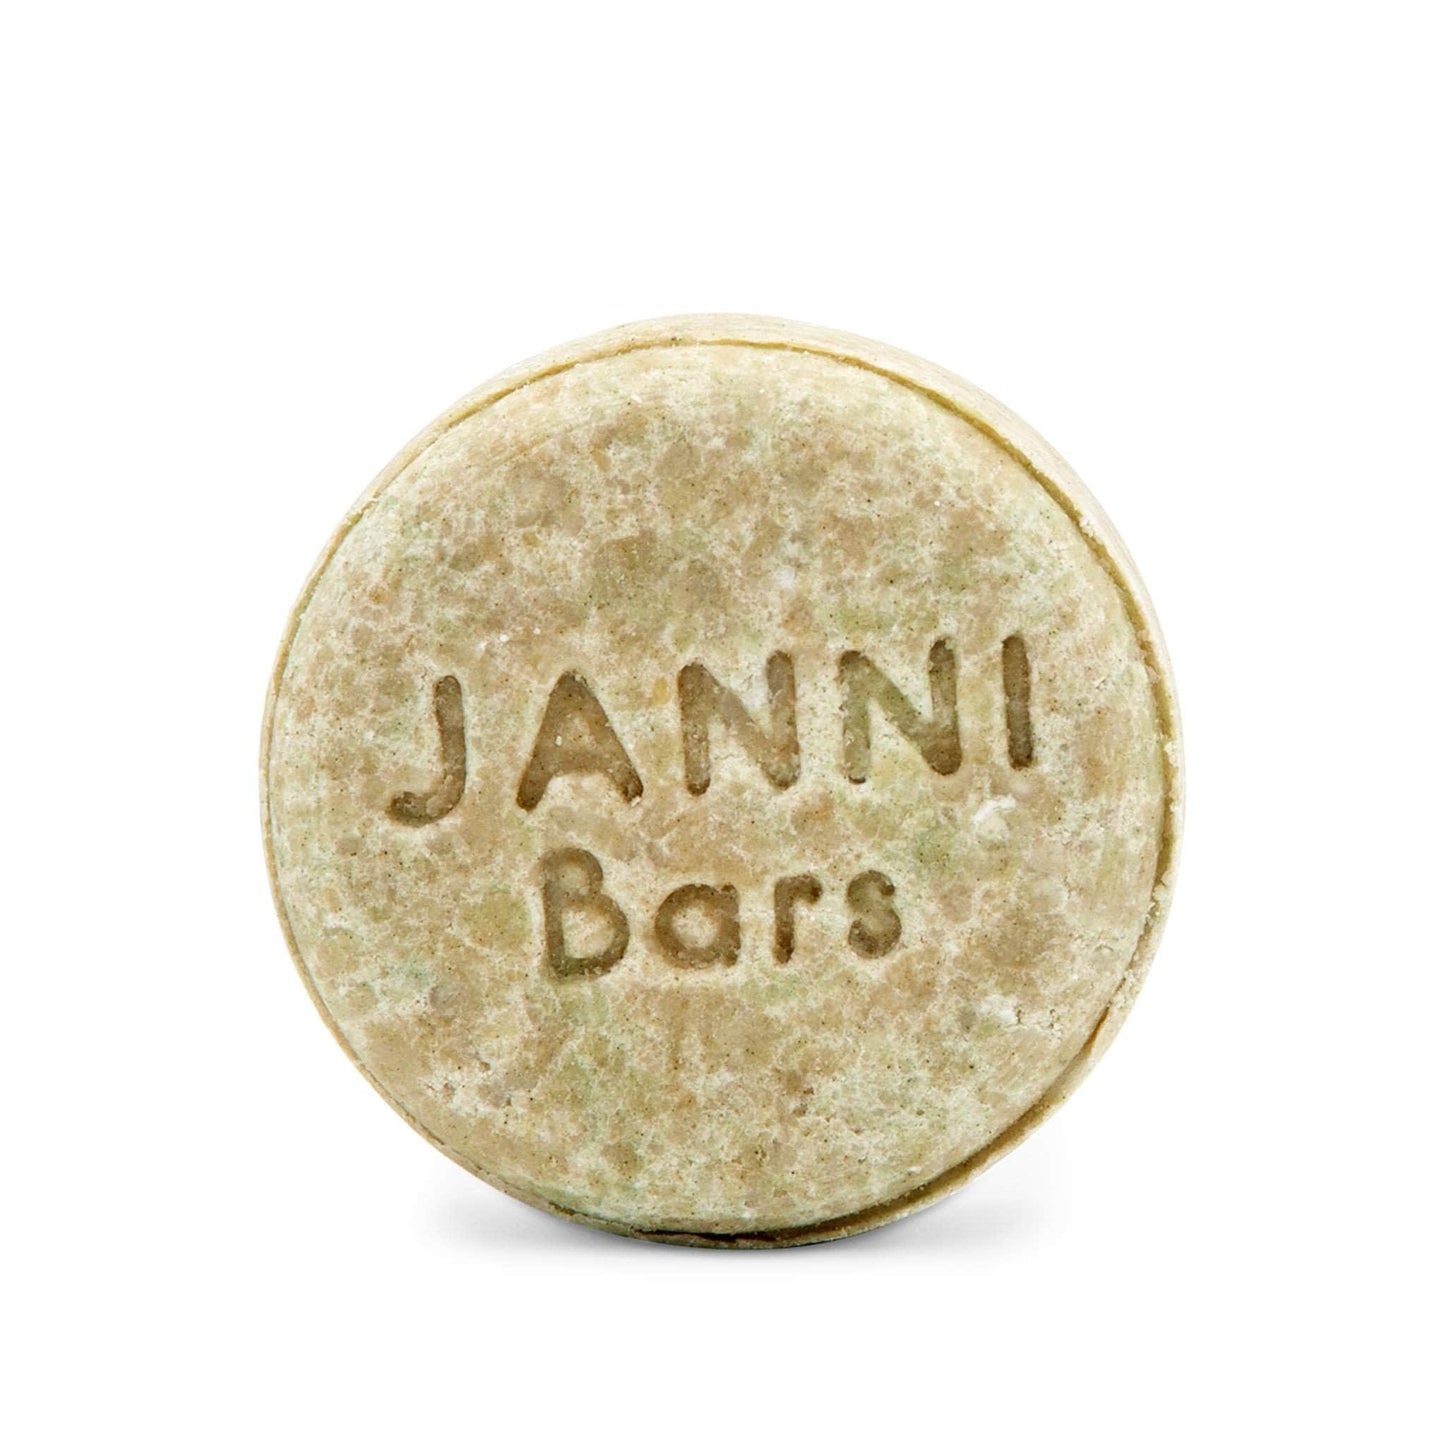 Janni Bars Shampoo Janni Bars Shampoo Bar - Dagda - Lemongrass & Eucalyptus